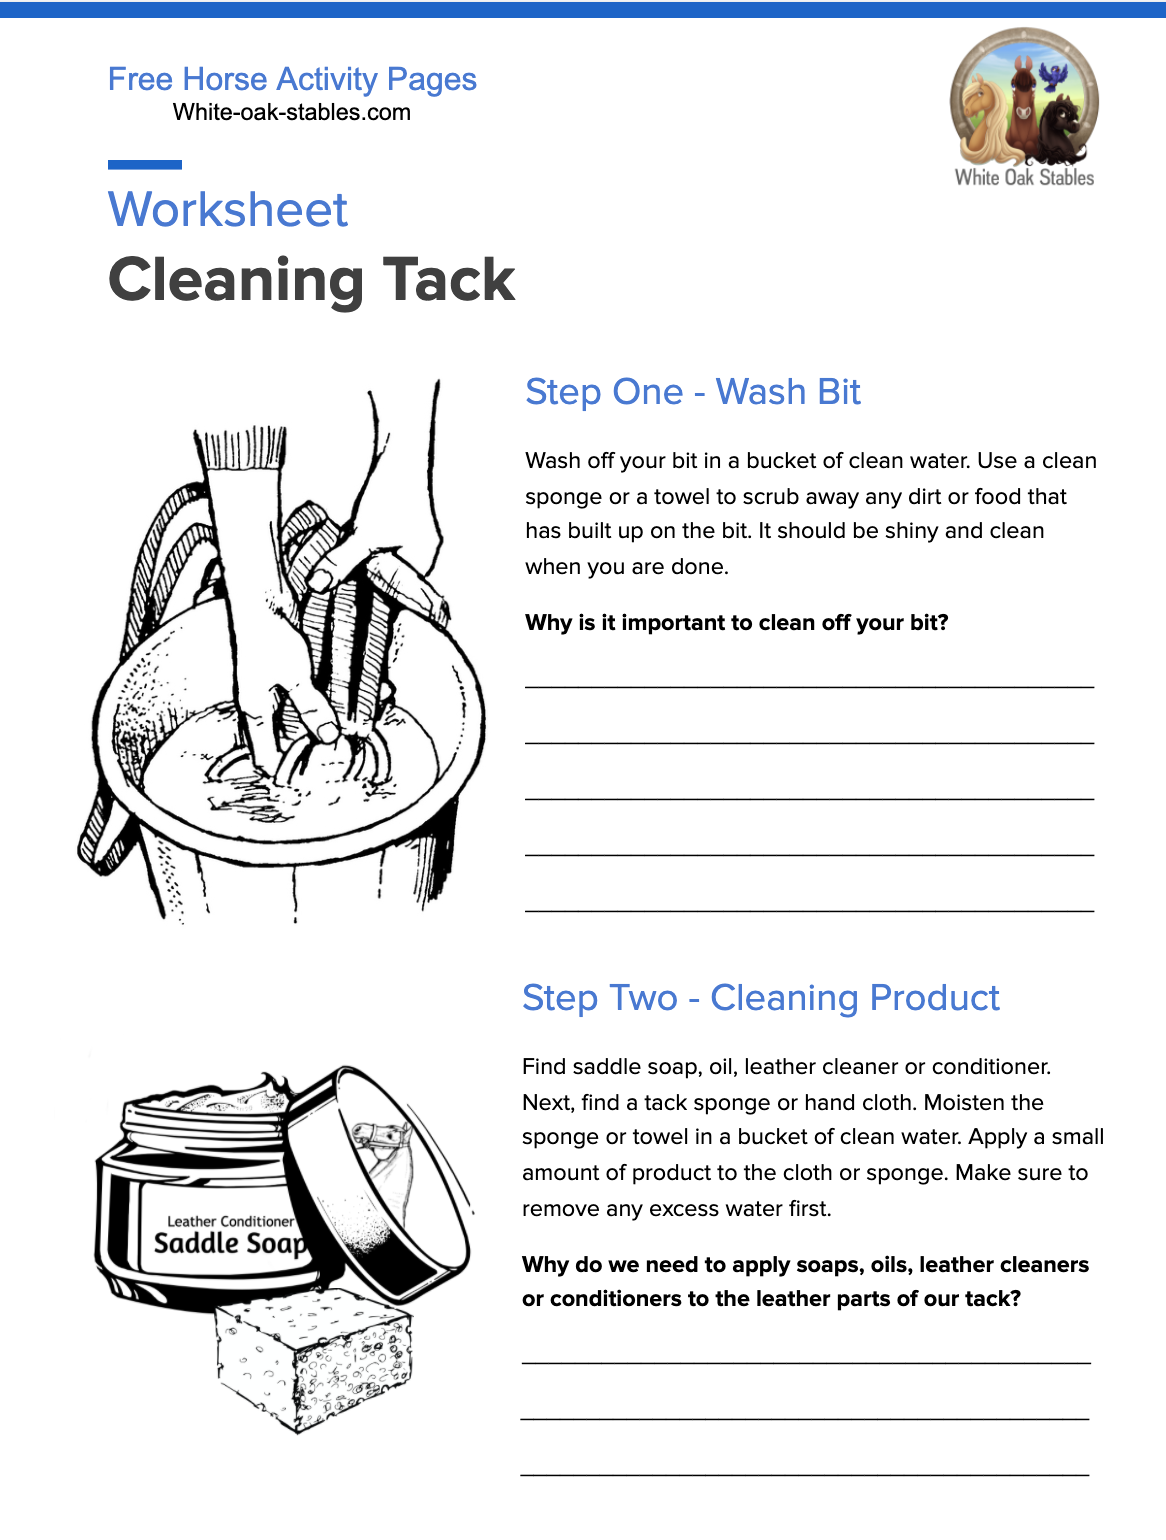 Worksheet – Cleaning Tack